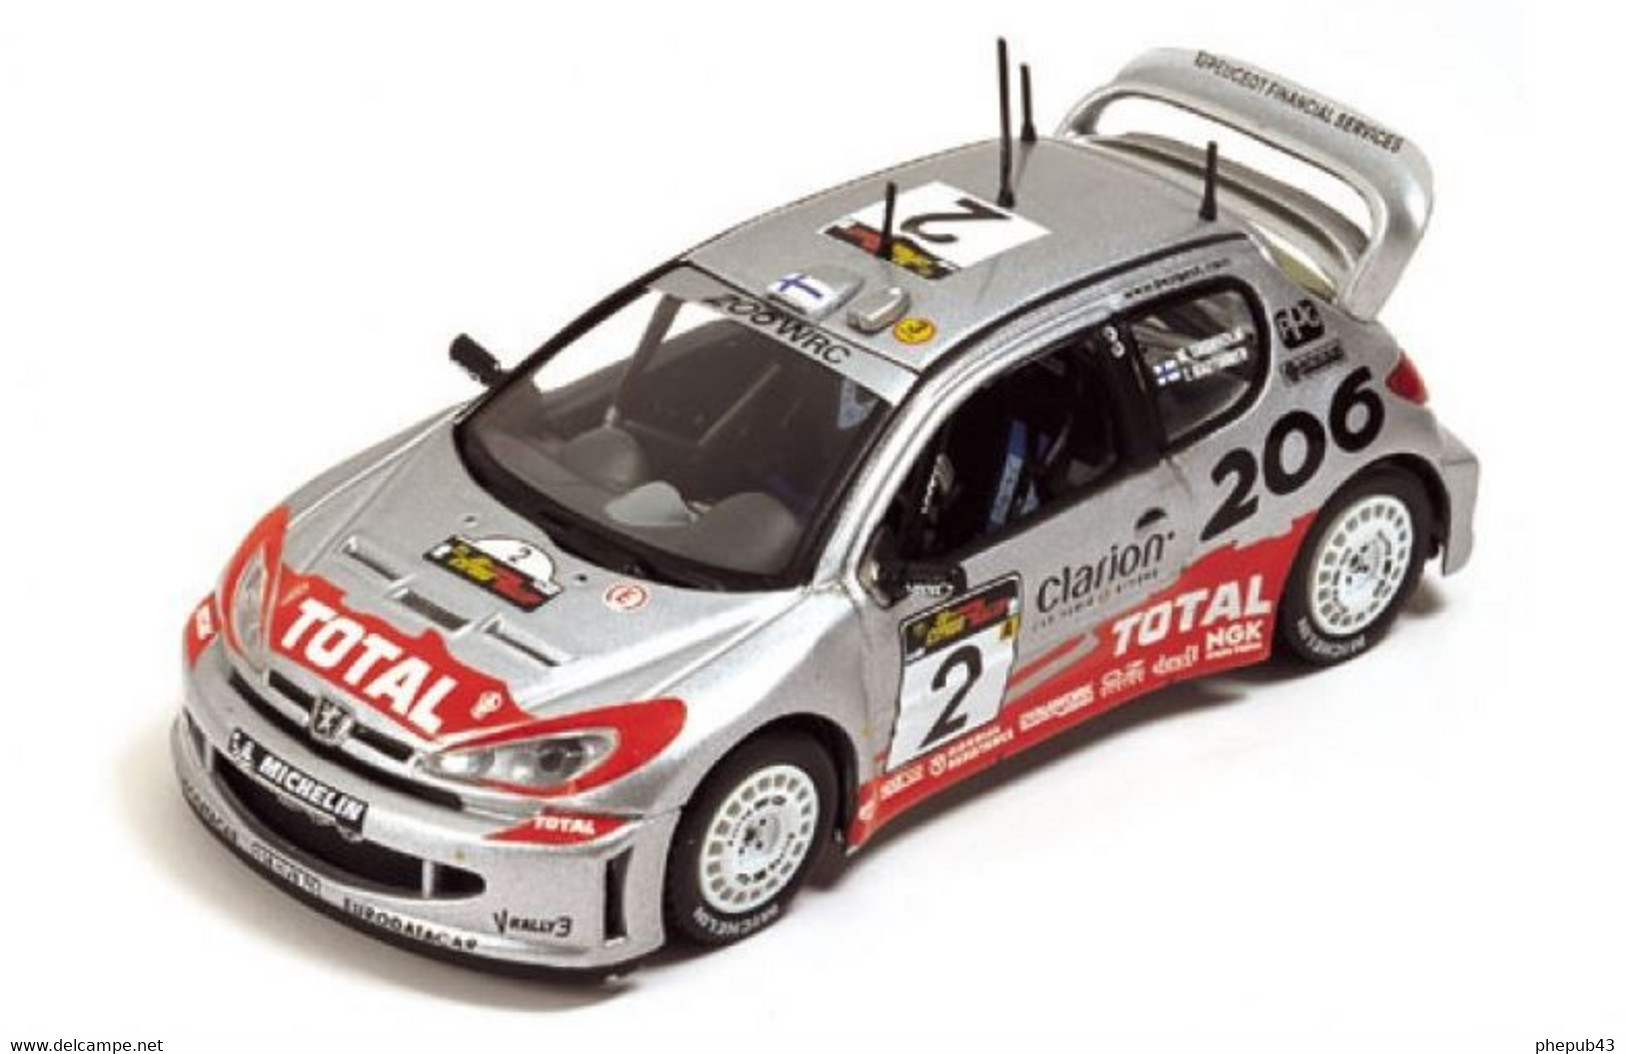 Peugeot 206 WRC - Clarion - M. Gronhölm/T. Rautiainen - 1st Cyprus 2002 #2 - Ixo - Ixo